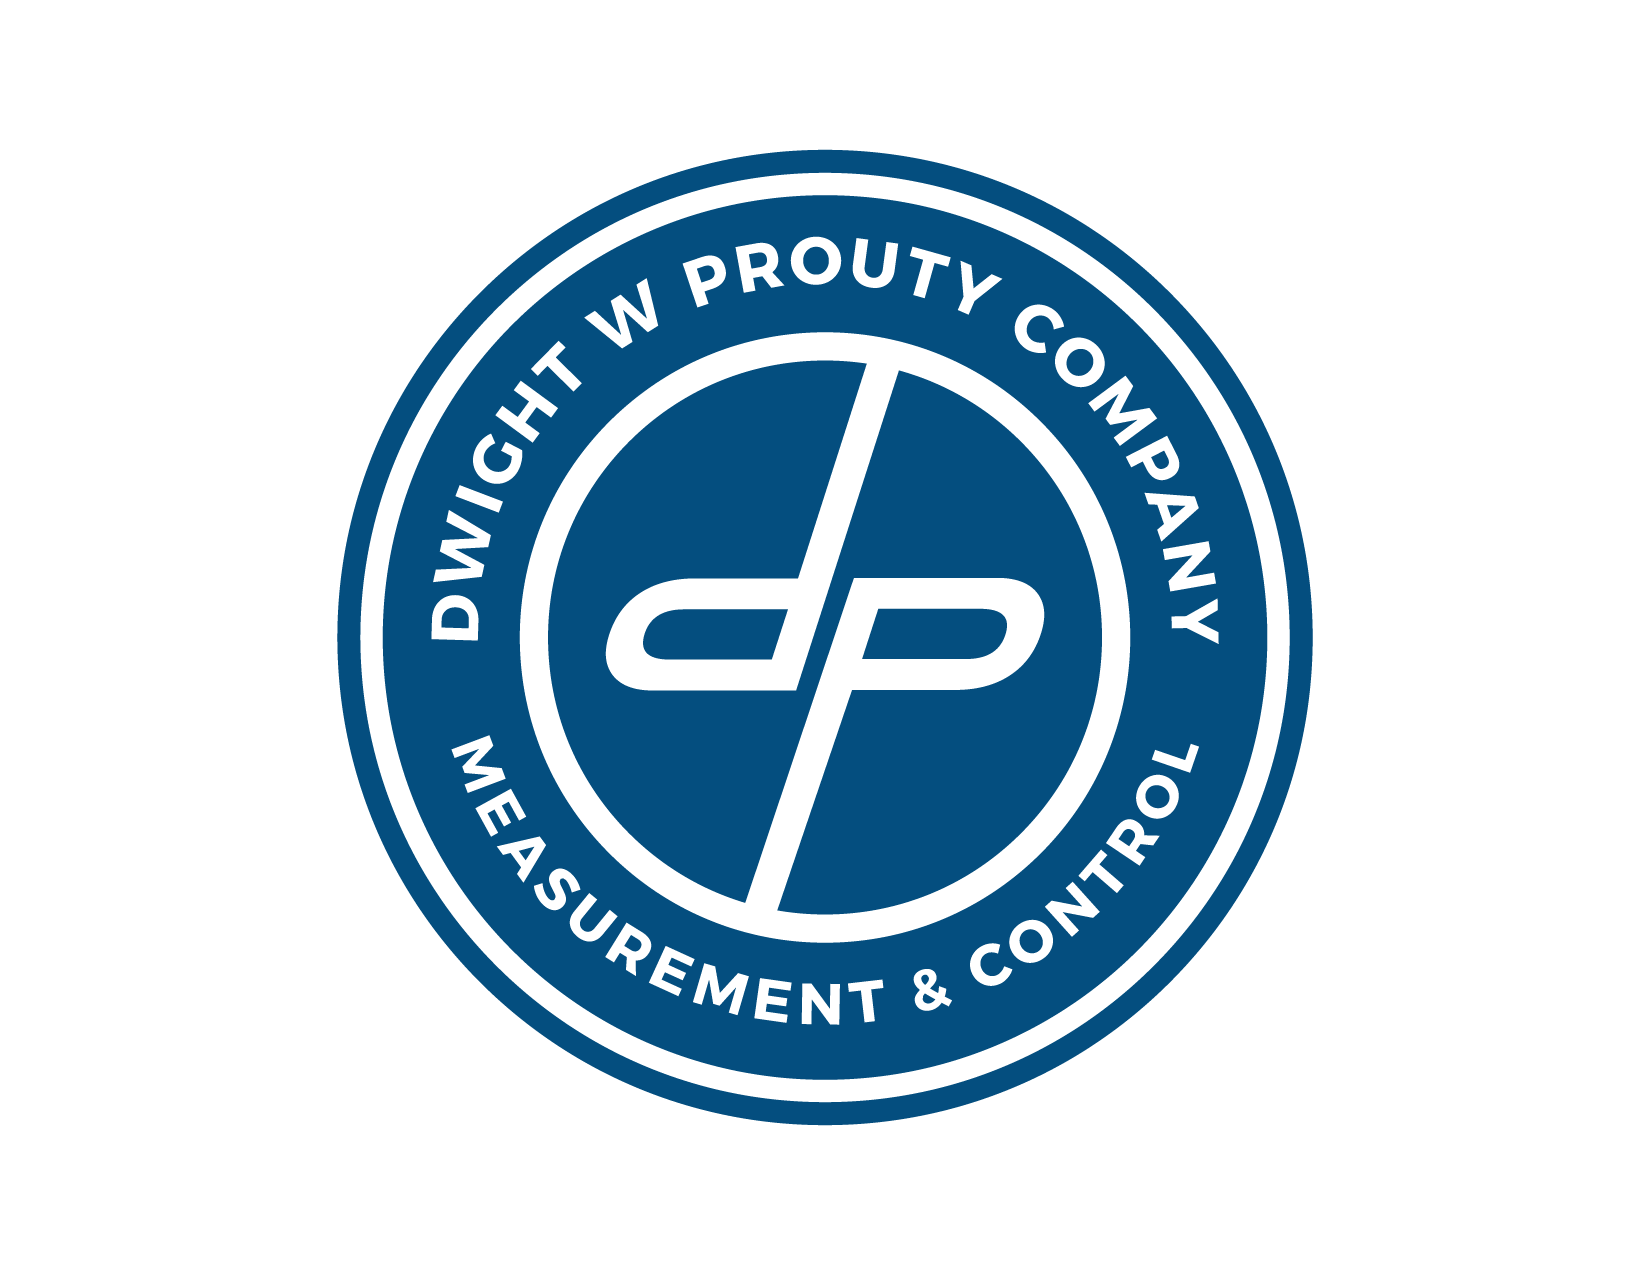 Dwight W. Prouty Company